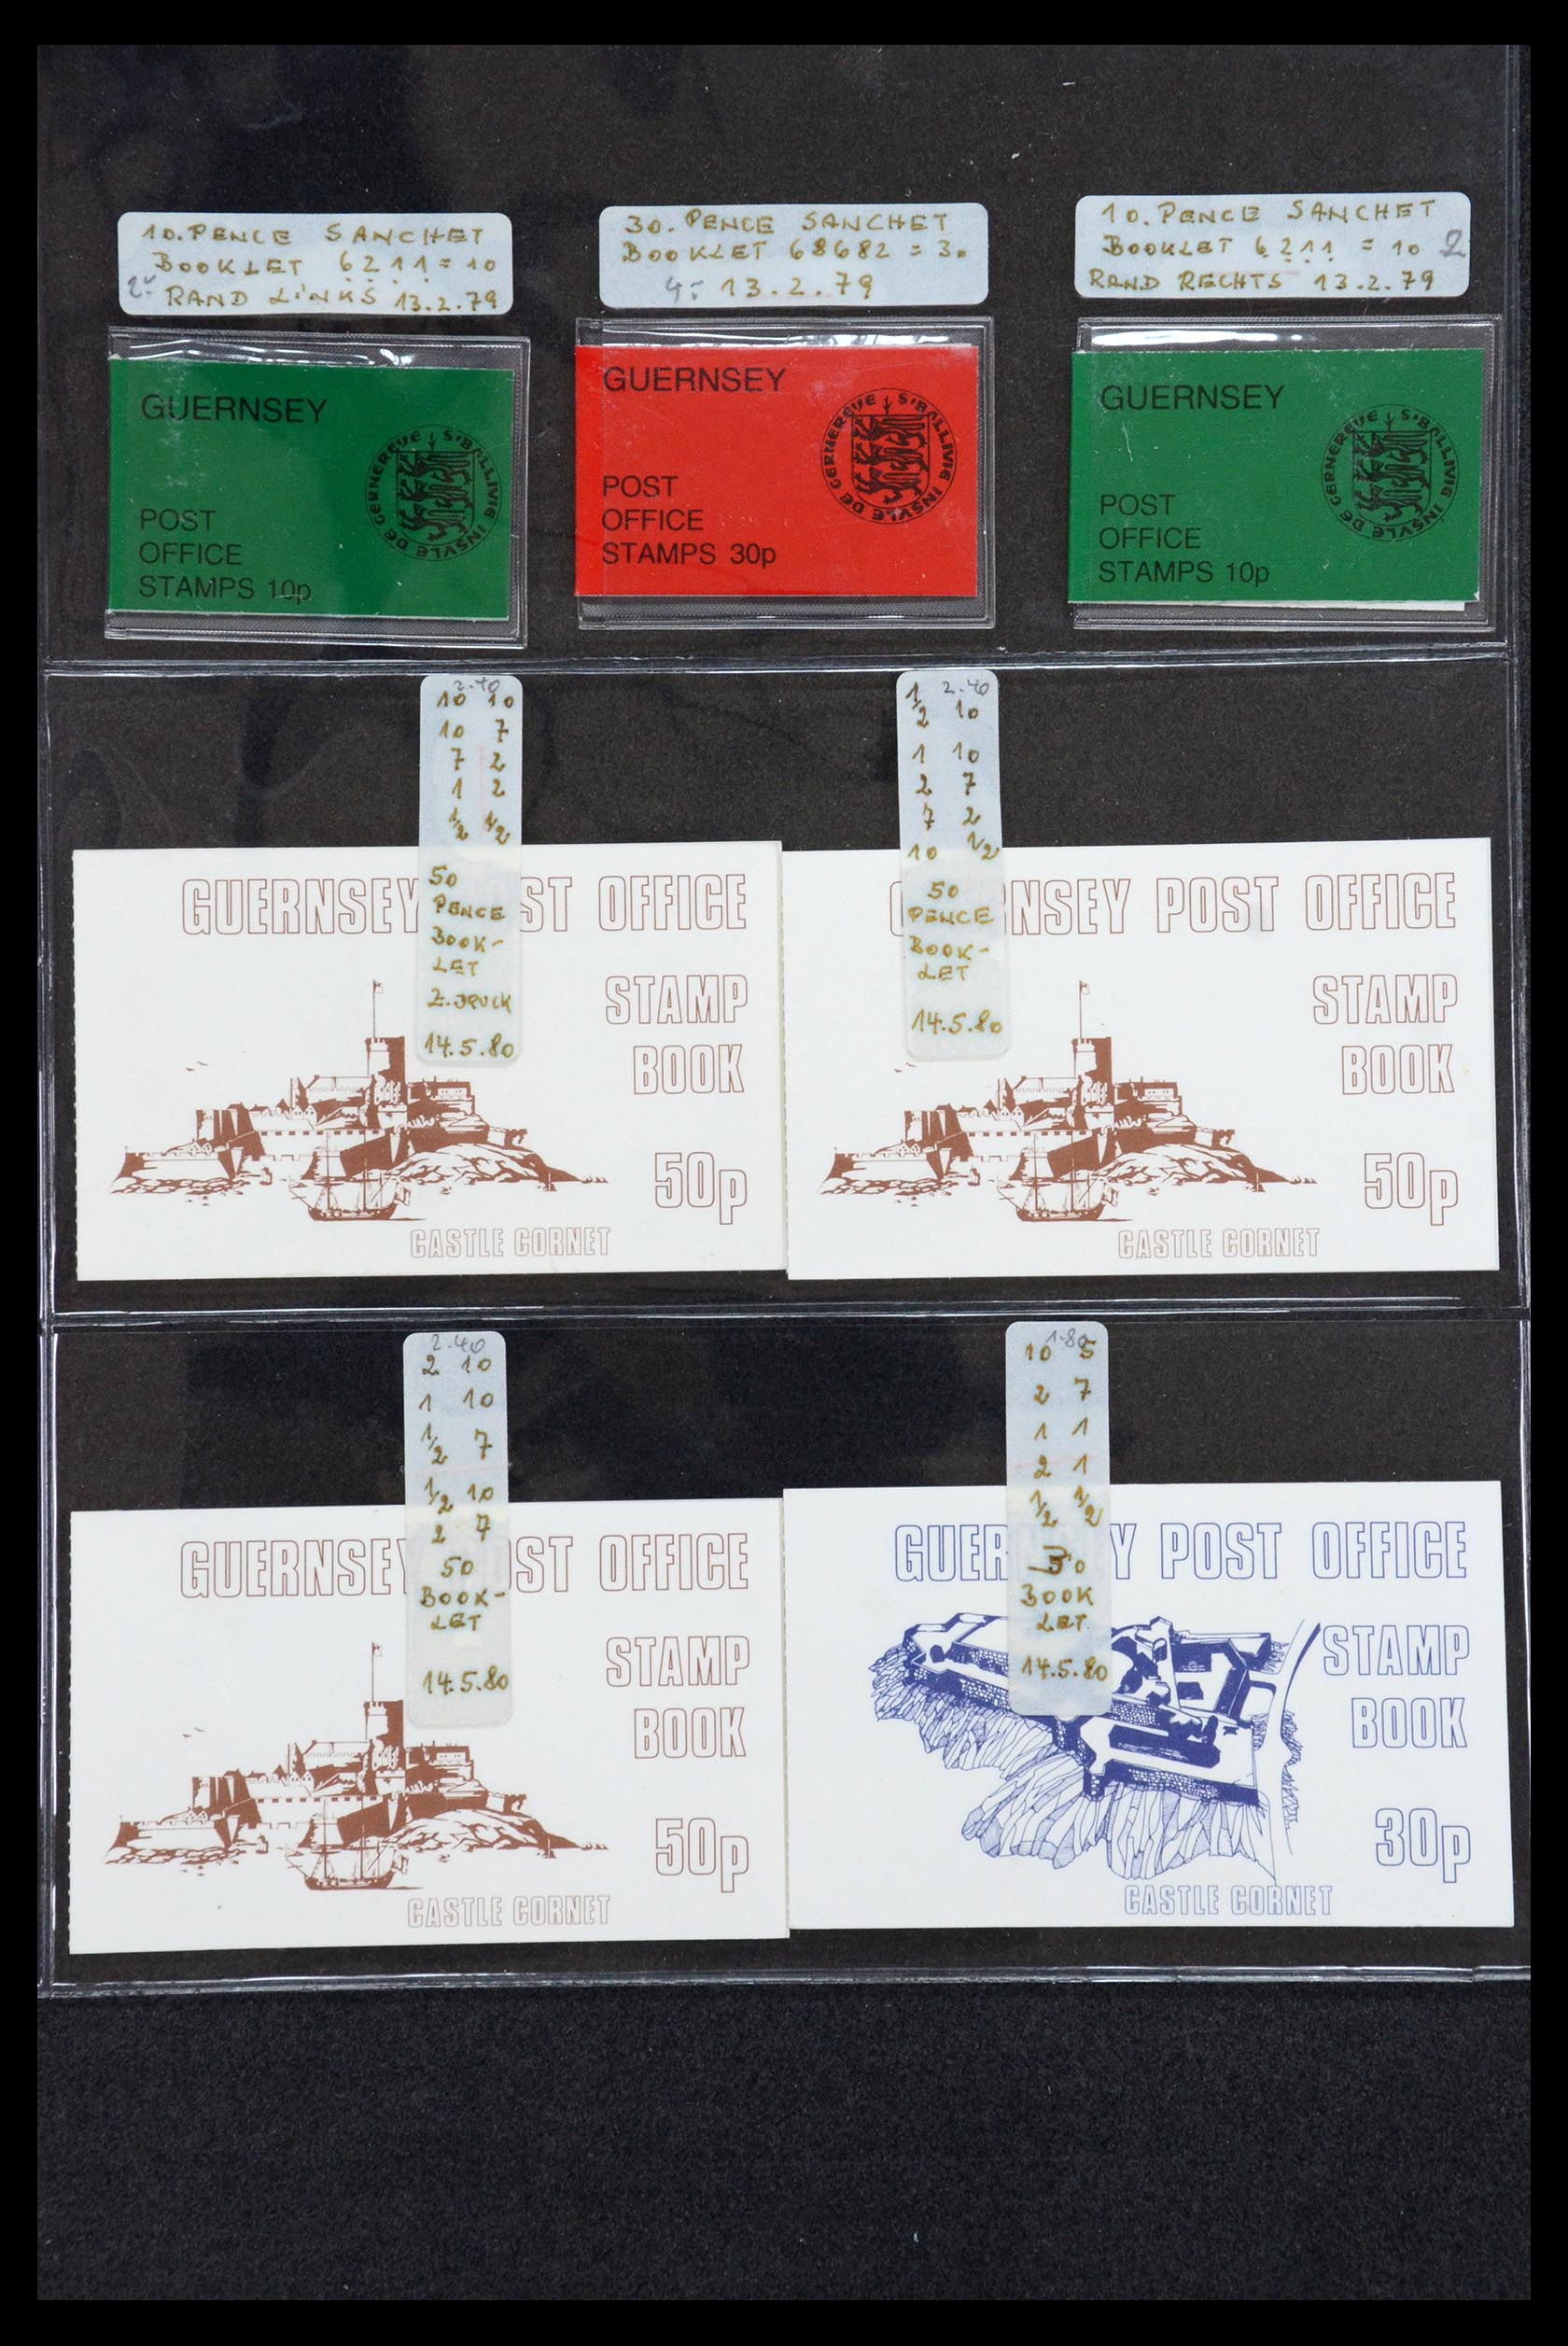 35976 004 - Stamp collection 35976 Guernsey and Alderney stamp booklets 1969-2015!